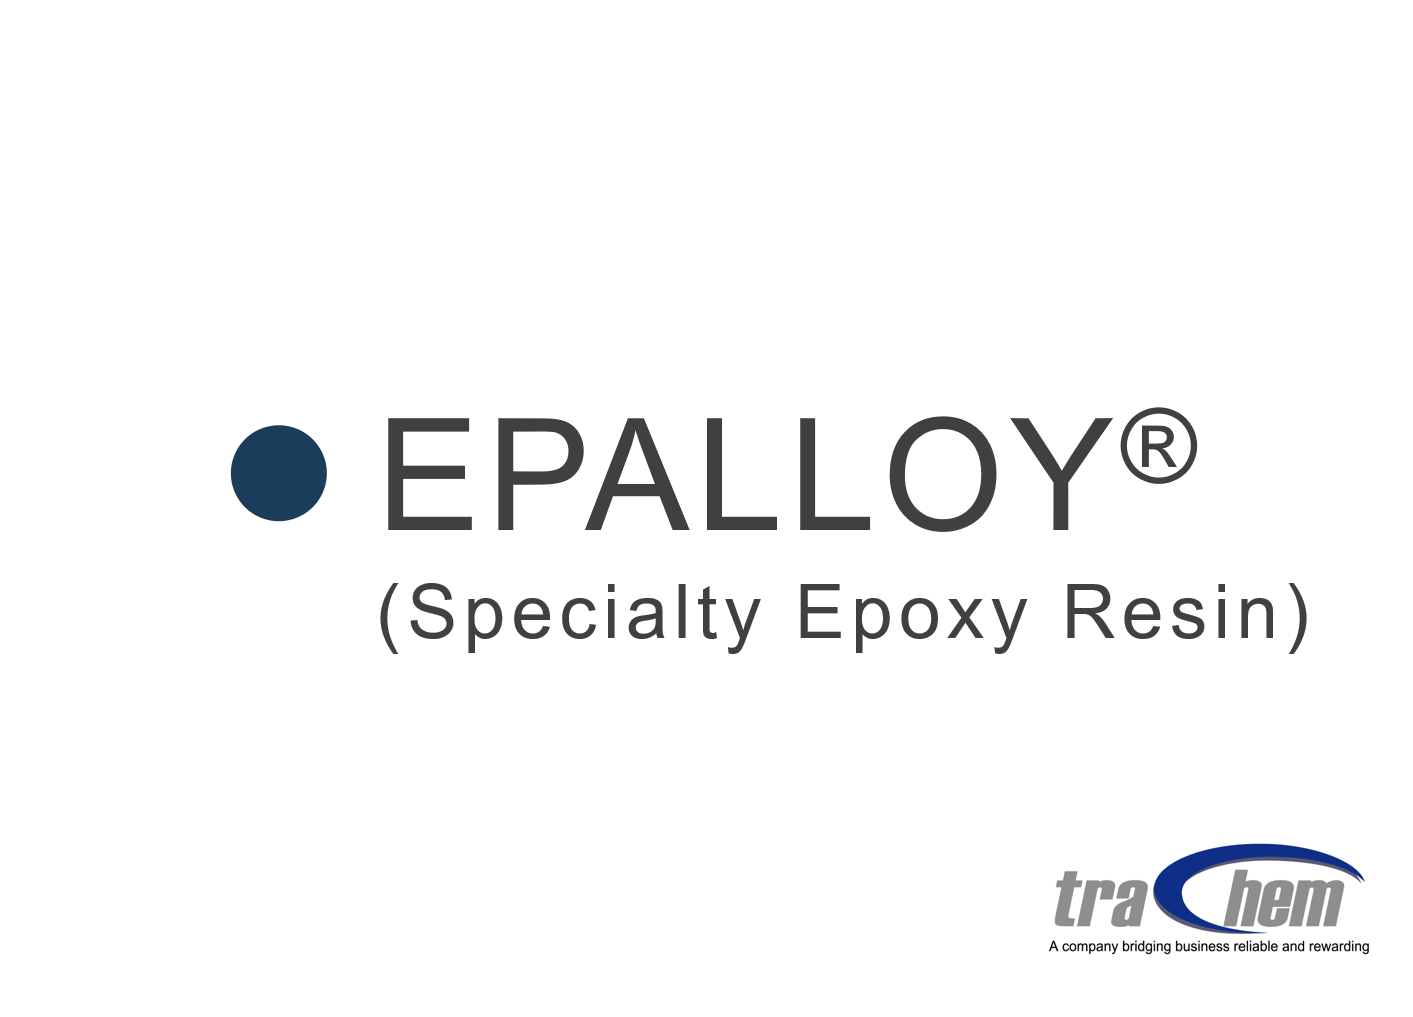 Specialty Epoxy Resin